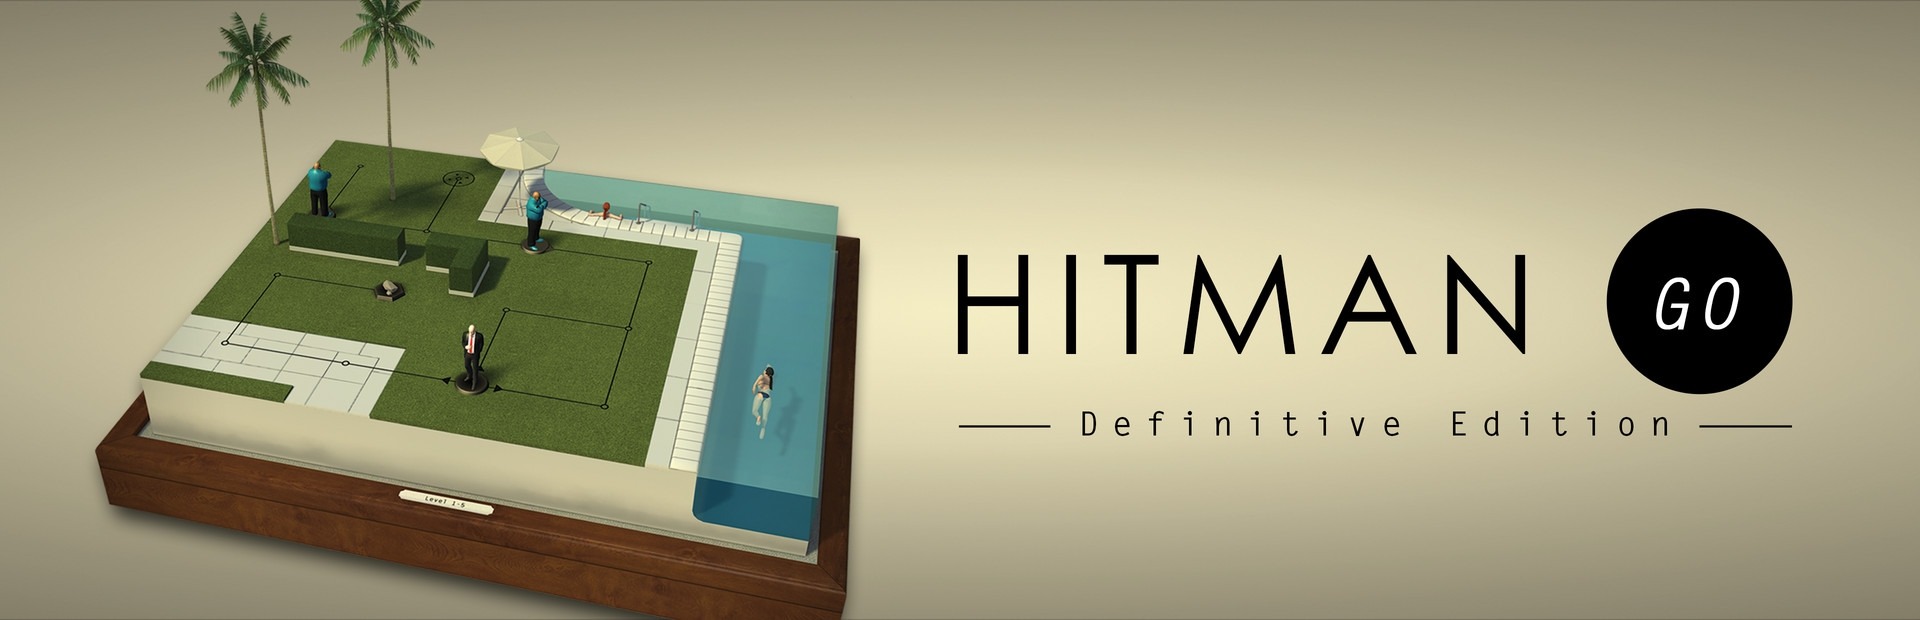 Banner Hitman GO Definitive Edition